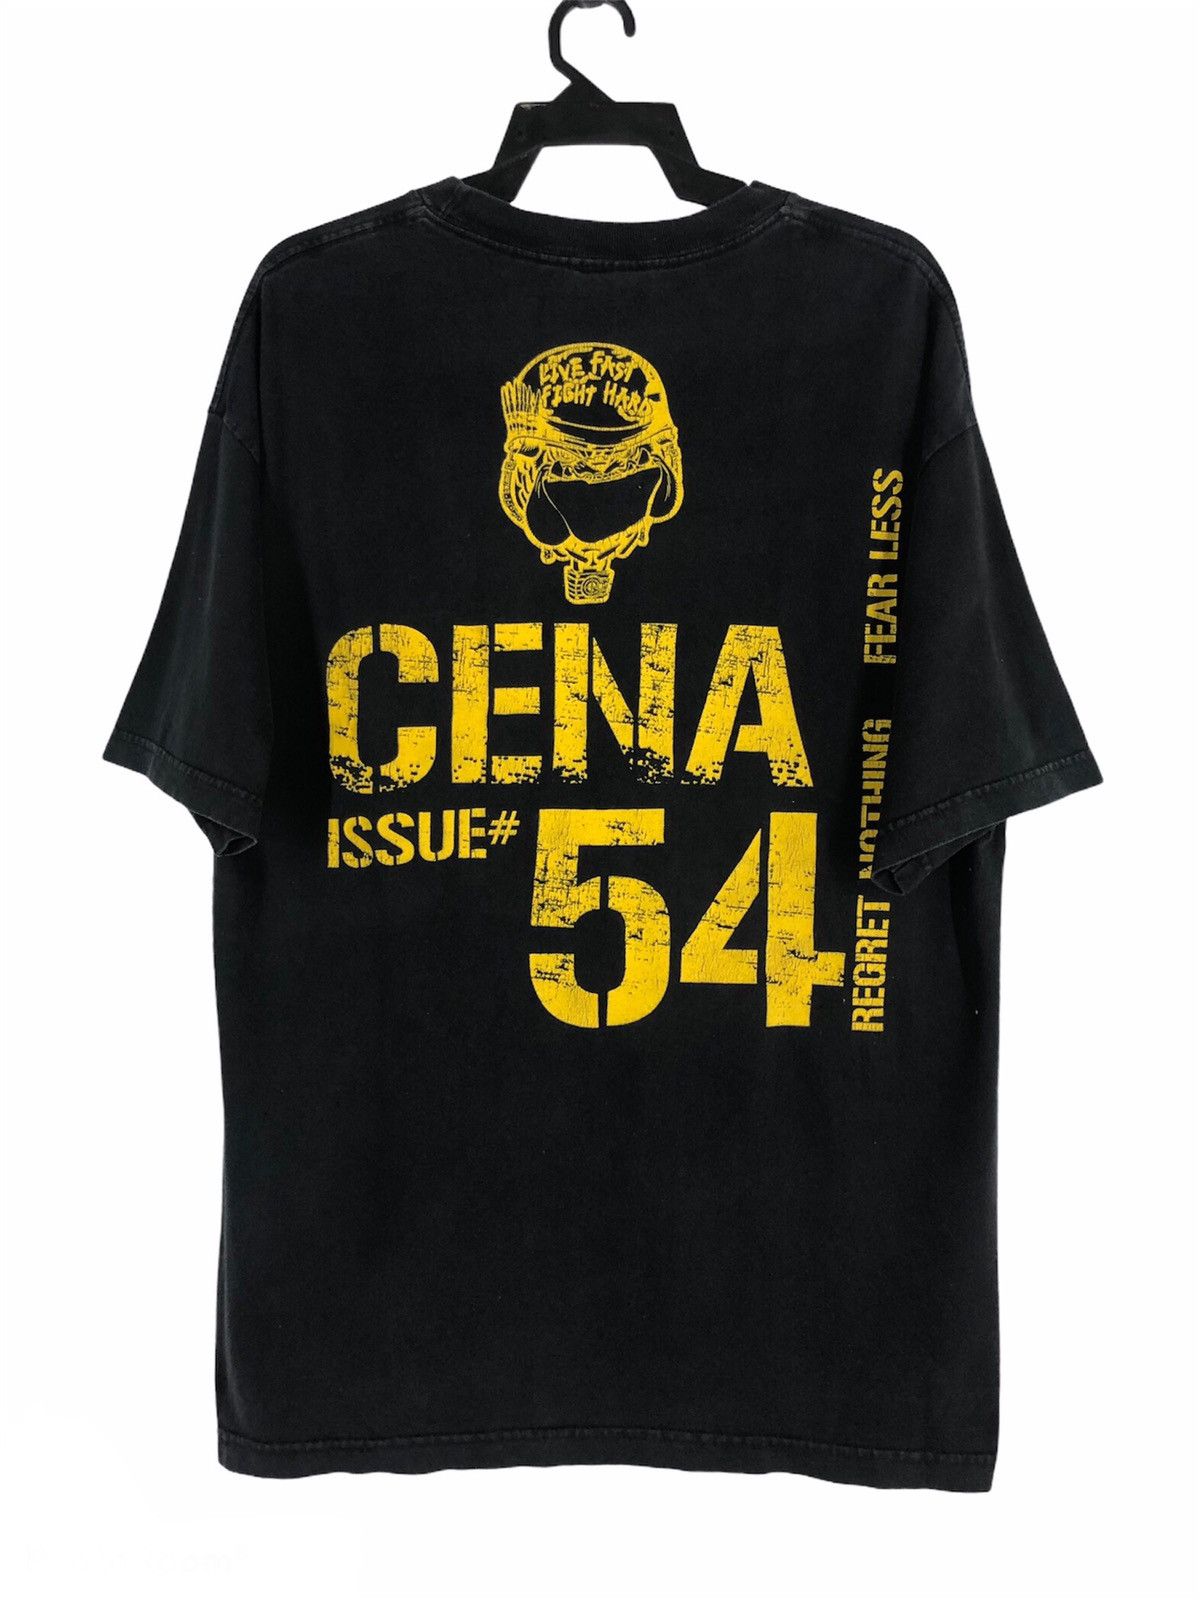 Vintage WWE John Cena Live Fast Fight Hard T Shirt cw21 Size US XL / EU 56 / 4 - 2 Preview